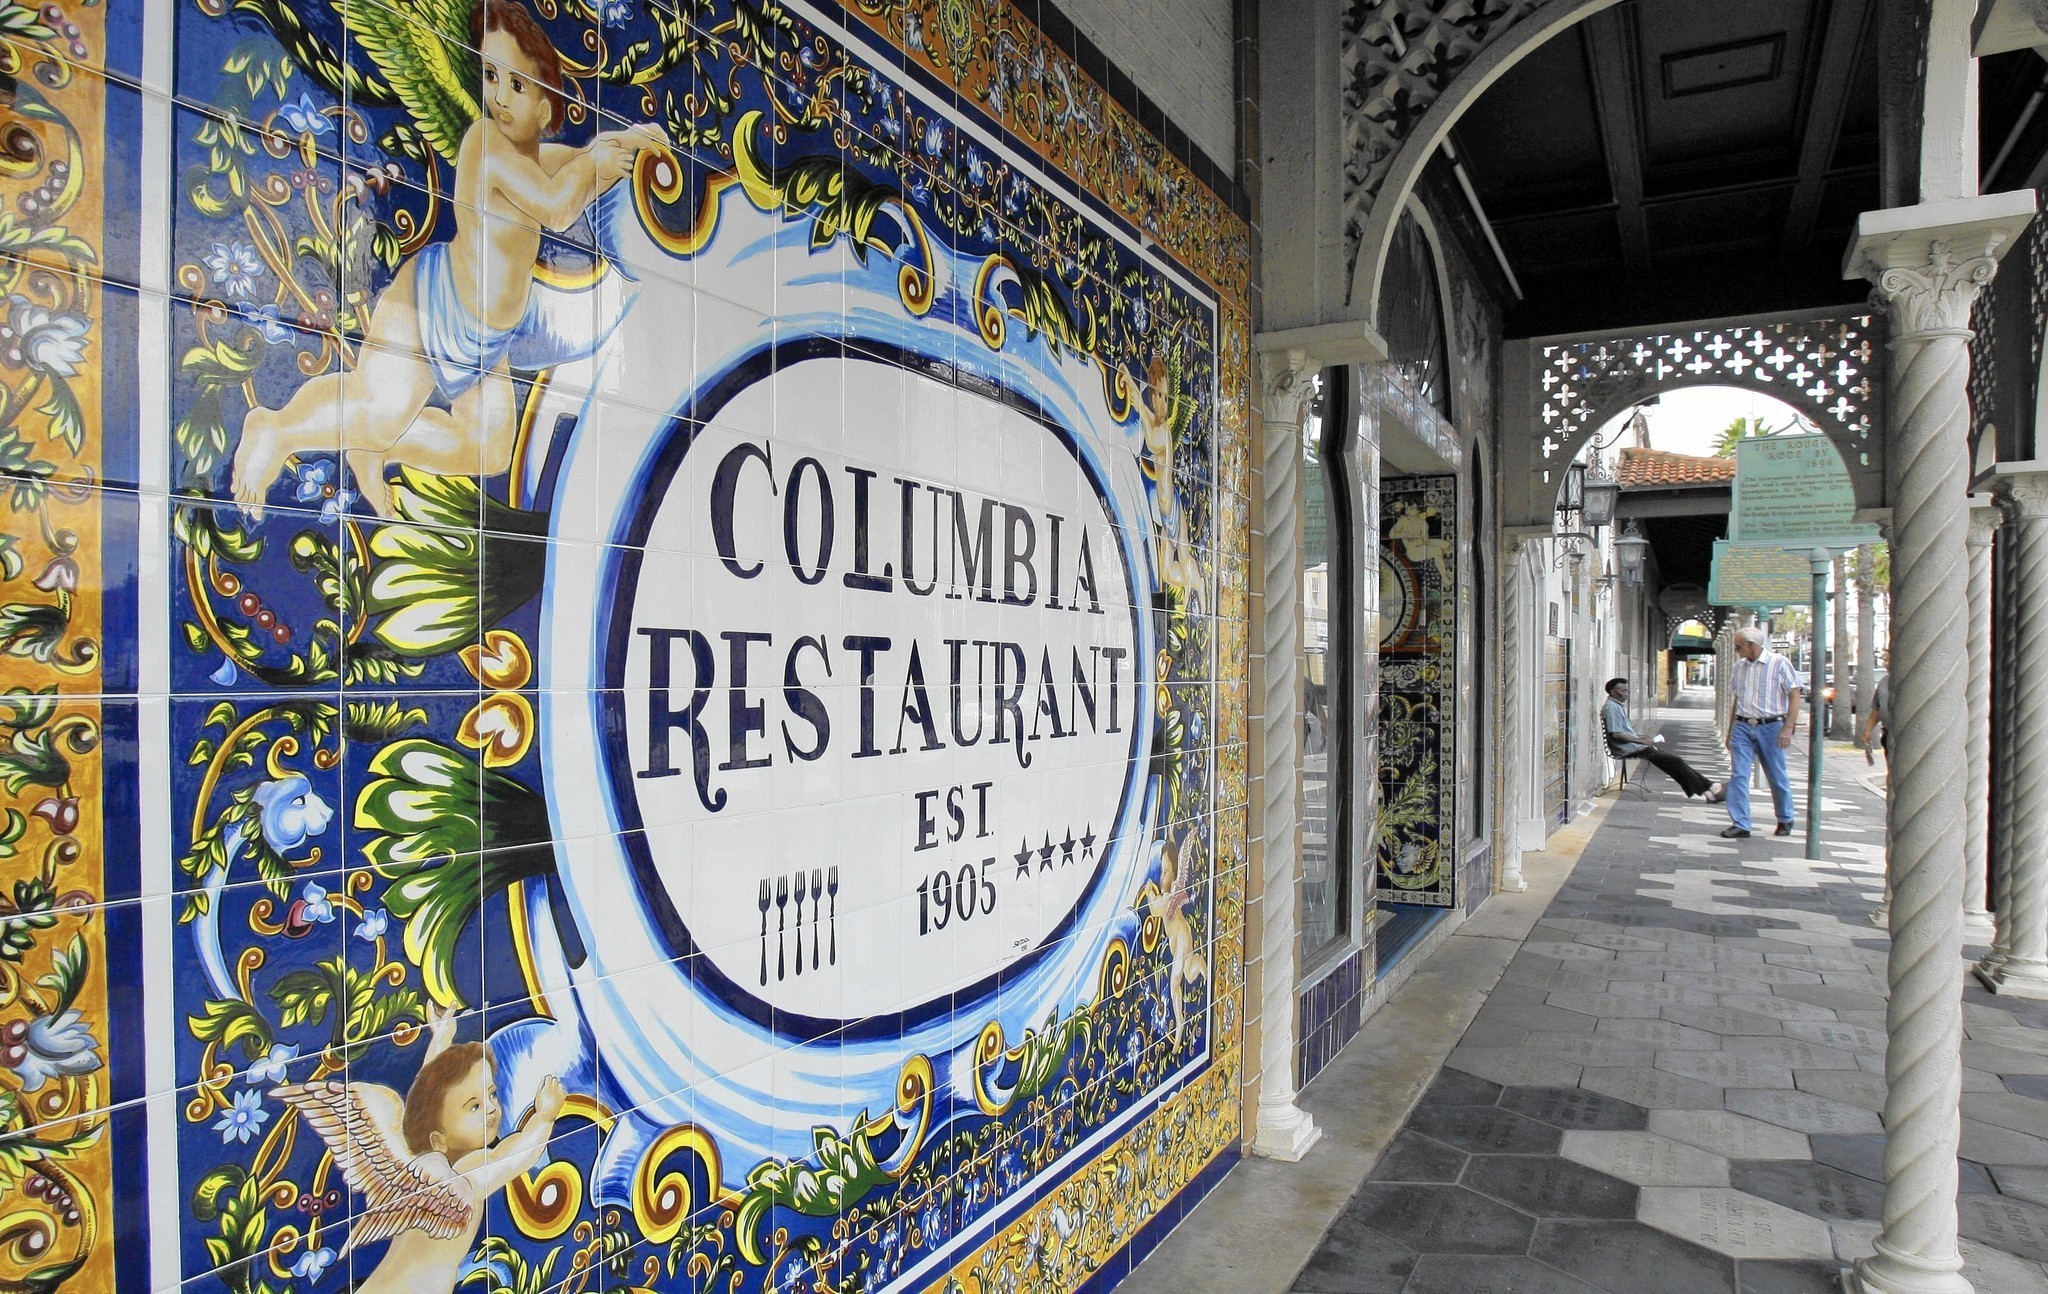 Columbia Restaurant in Ybor famous for Cuban sandwiches Orlando Sentinel